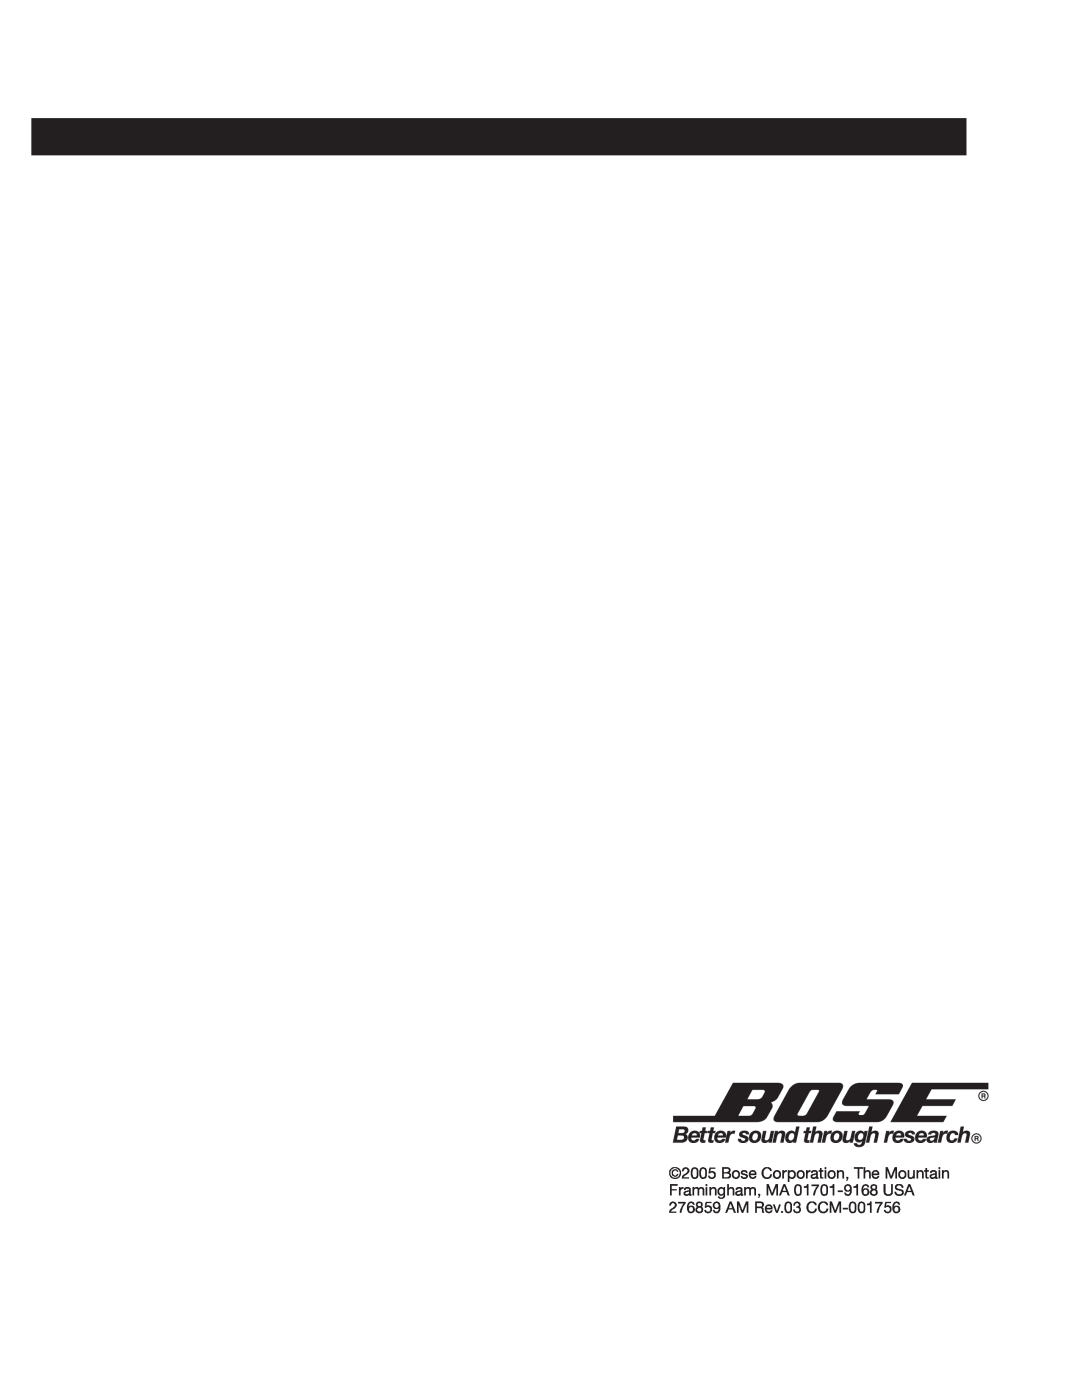 Bose LT3202 manual Bose Corporation, The Mountain Framingham, MA 01701-9168 USA, AM Rev.03 CCM-001756 